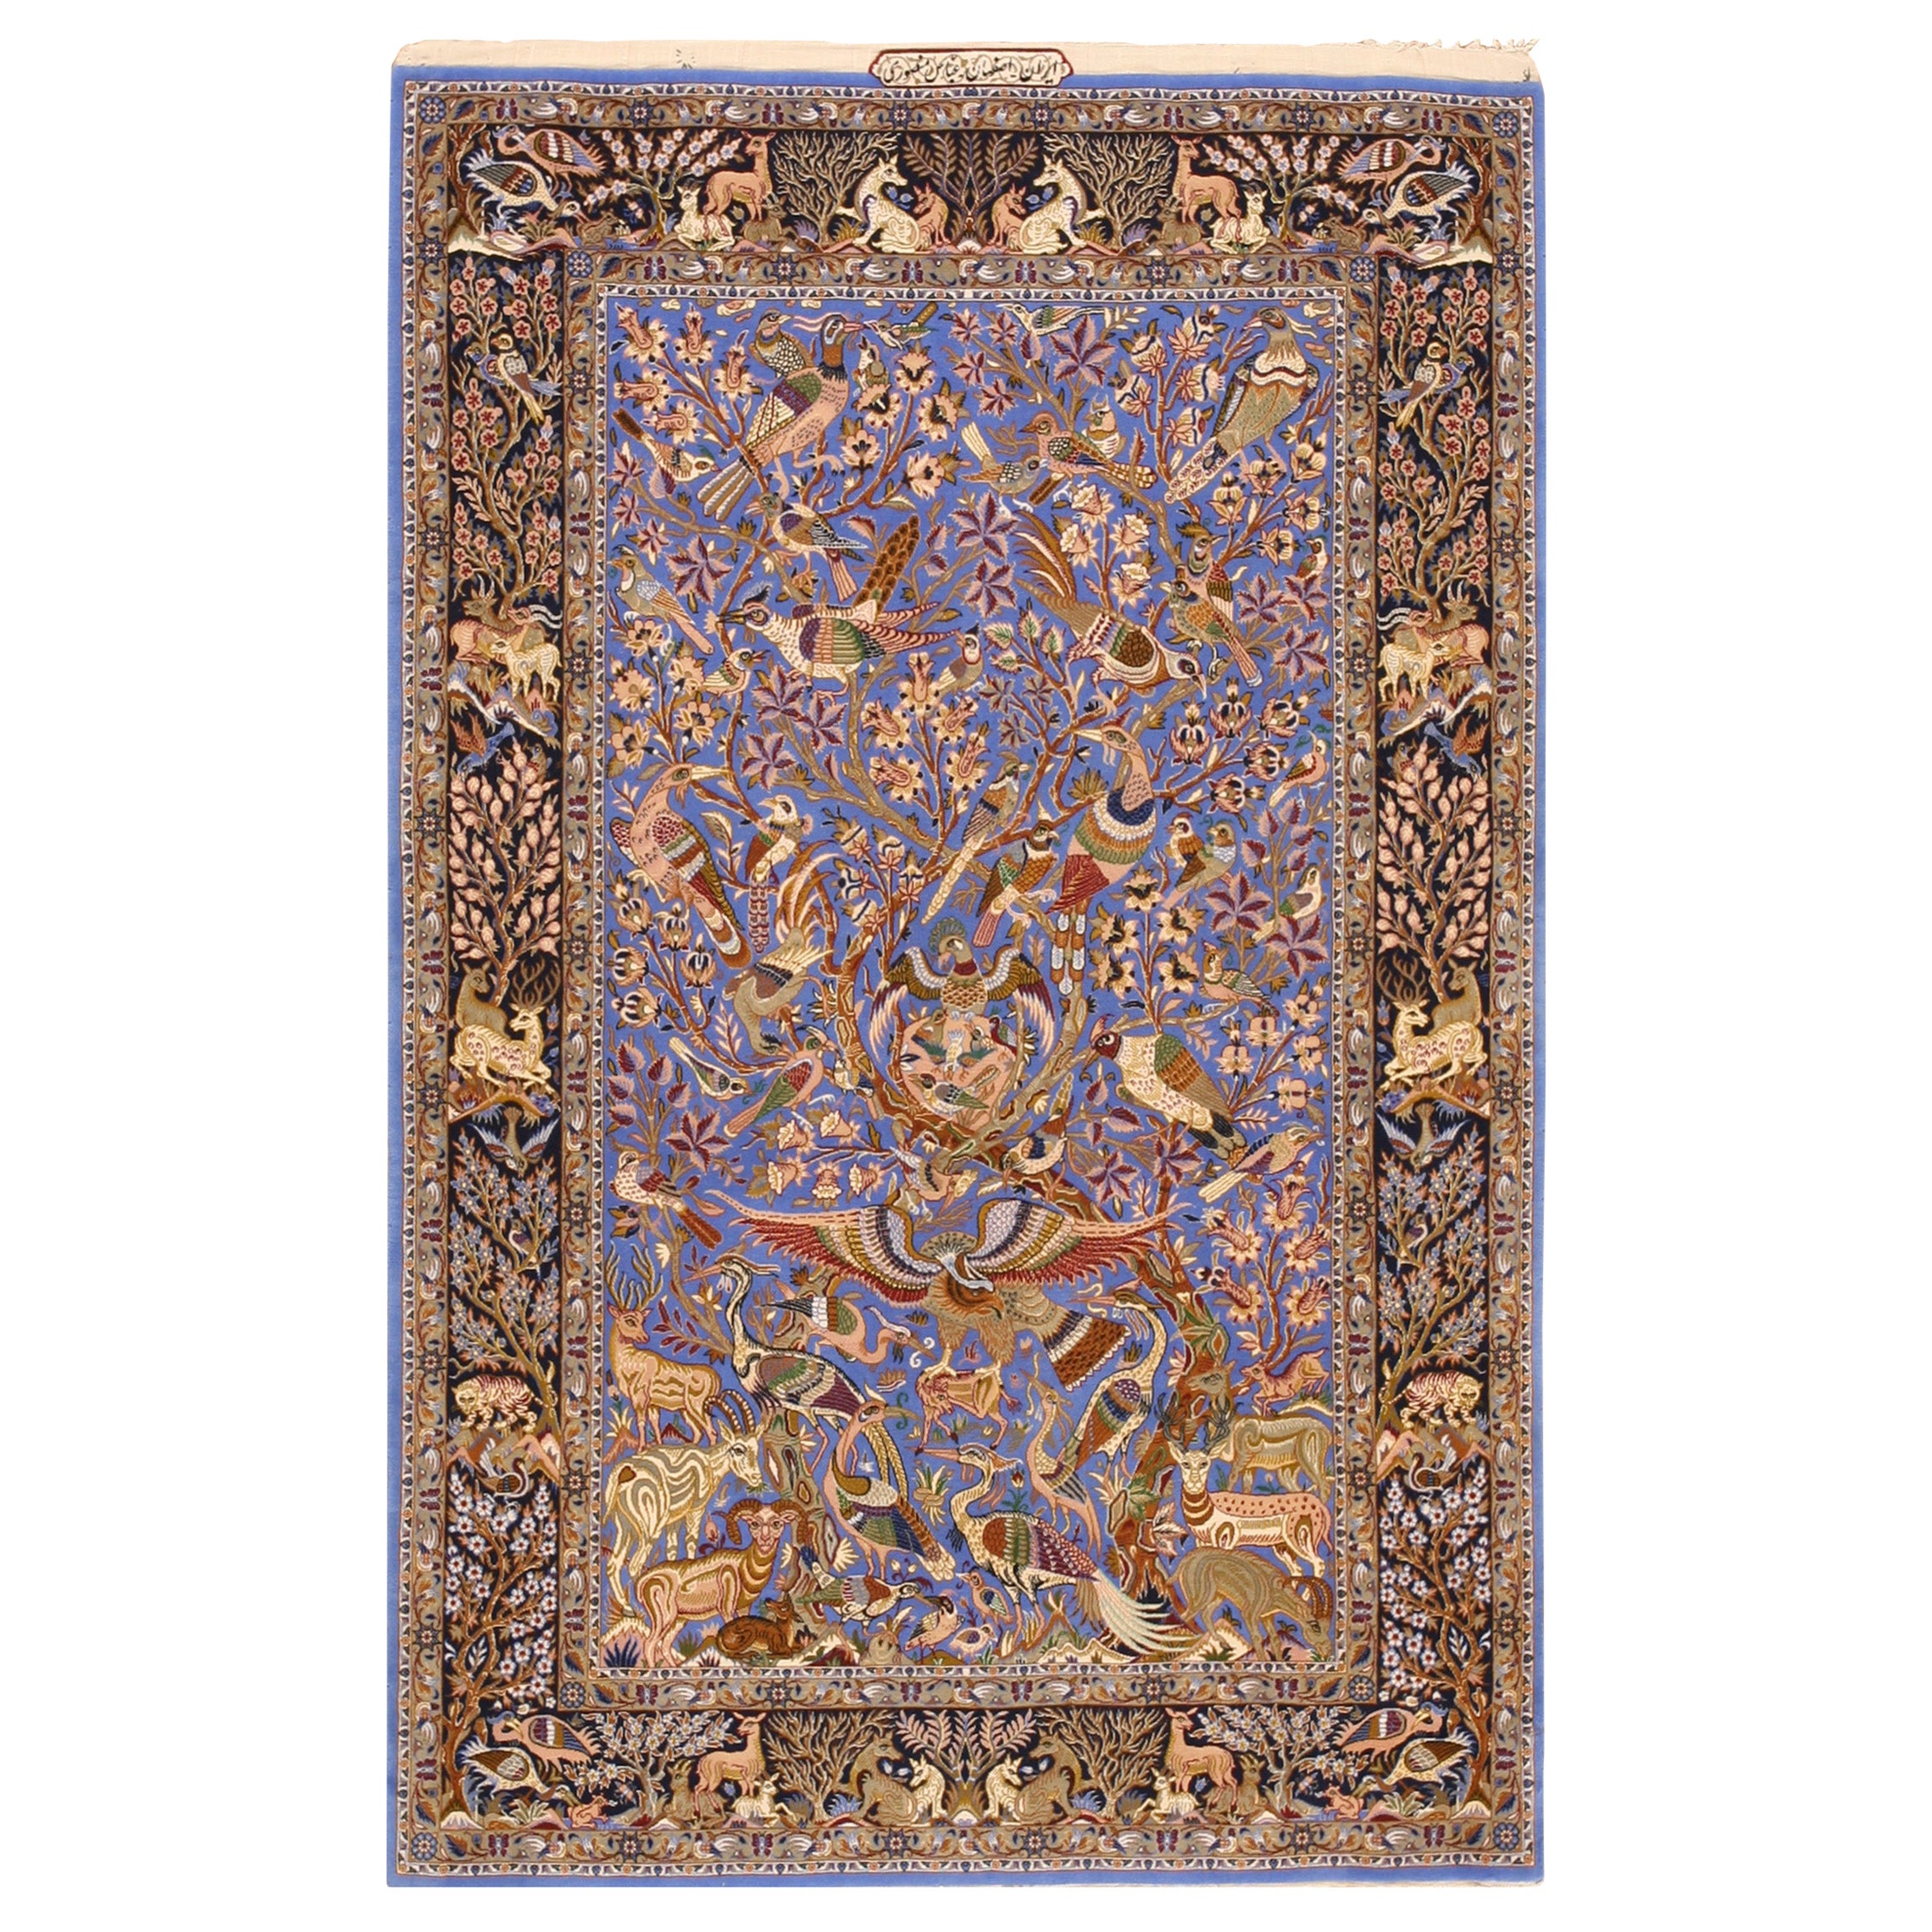 Mid 20th Century Persian Isfahan Silk Carpet ( 3' 2" x 5' 6" - 97 x 167 cm )